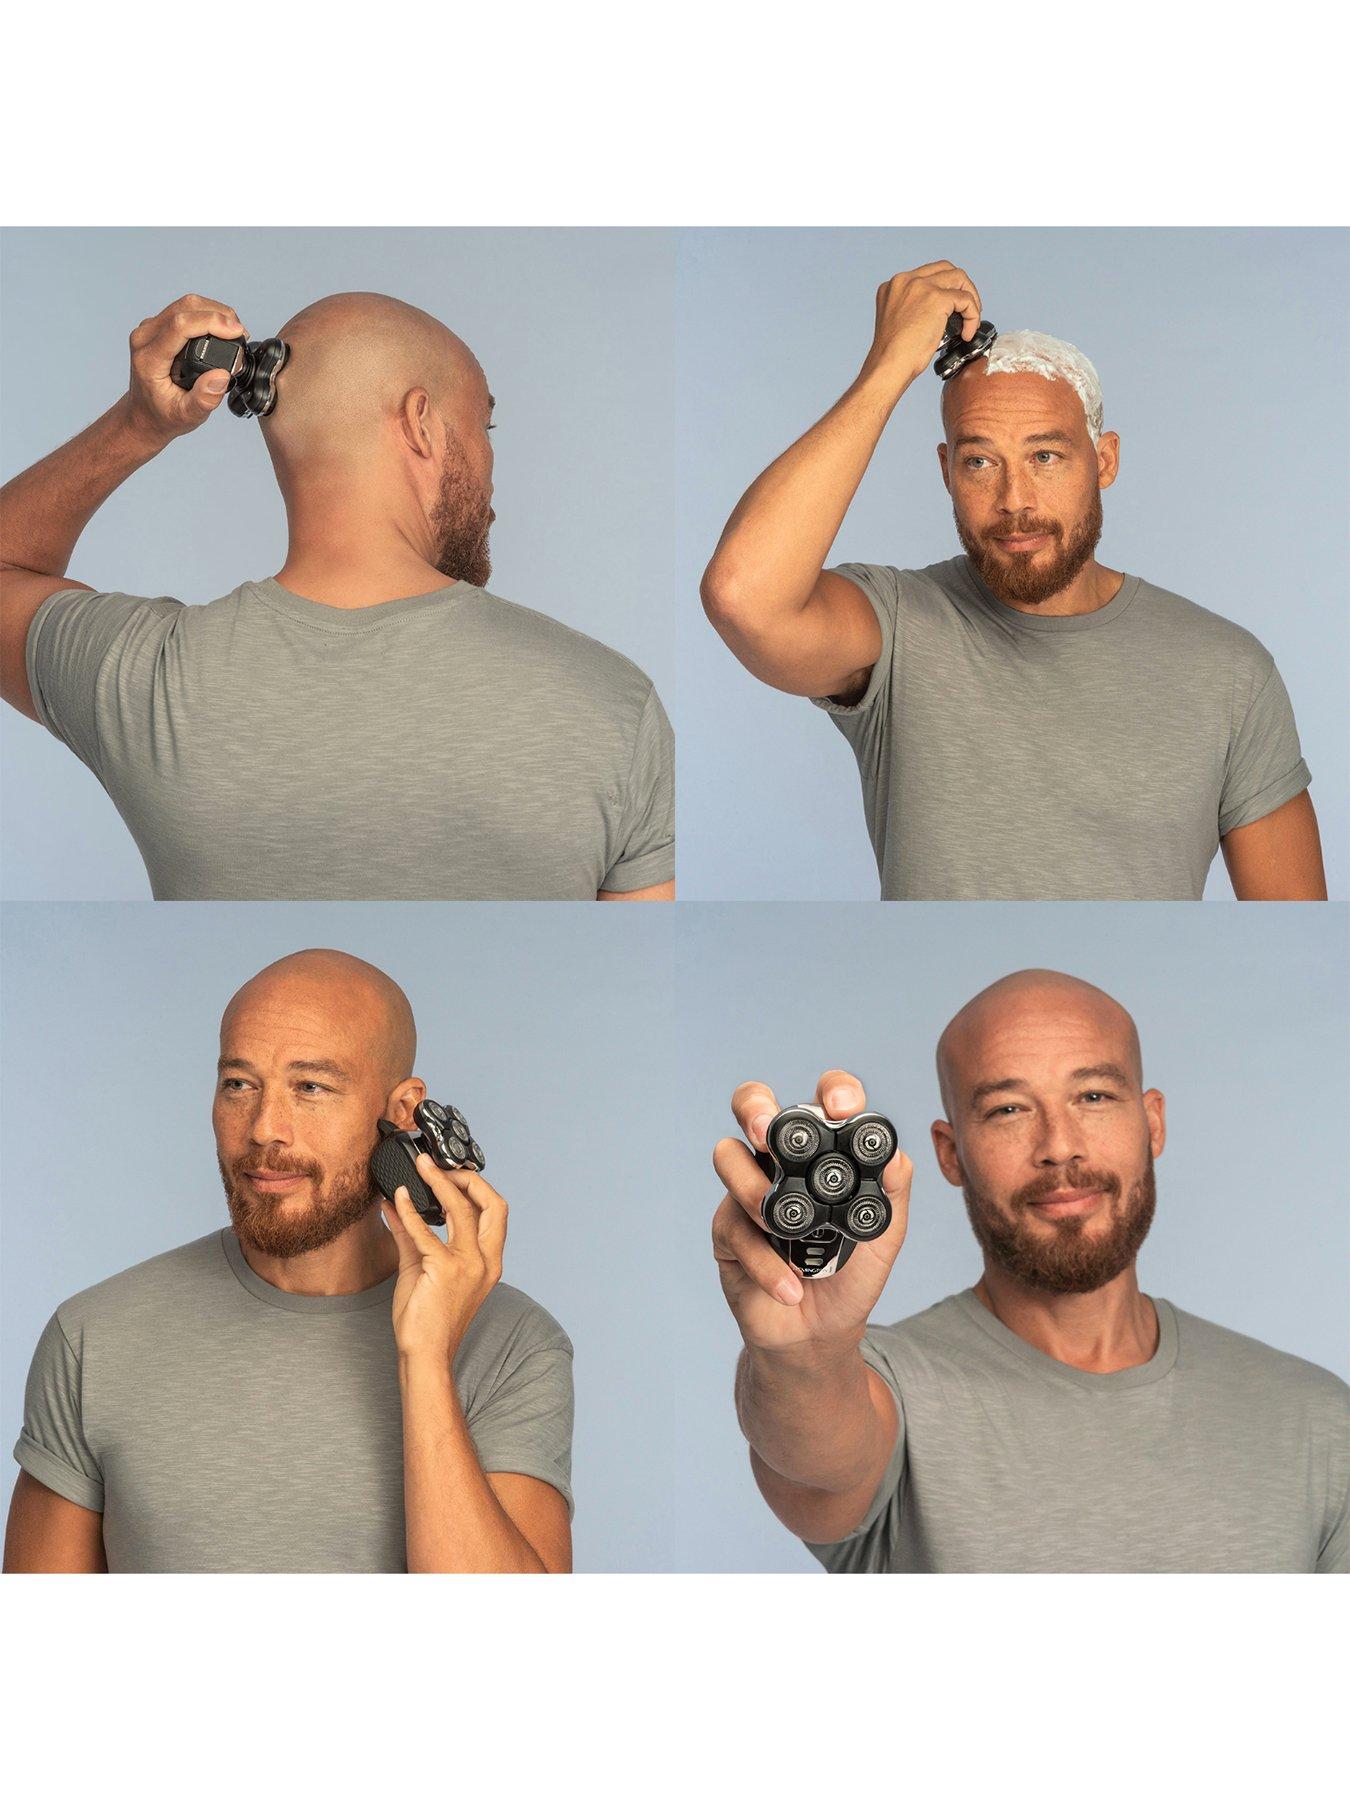 remington rx5 ultimate head shaver for bald men